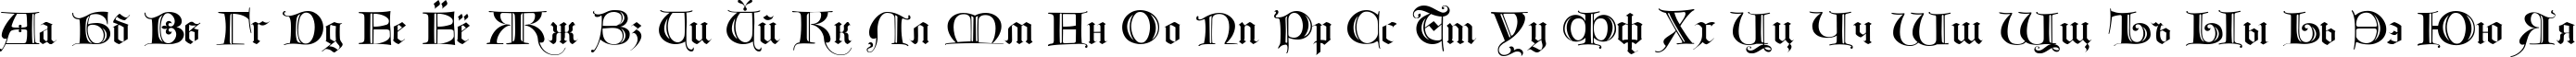 Пример написания русского алфавита шрифтом Lombardia